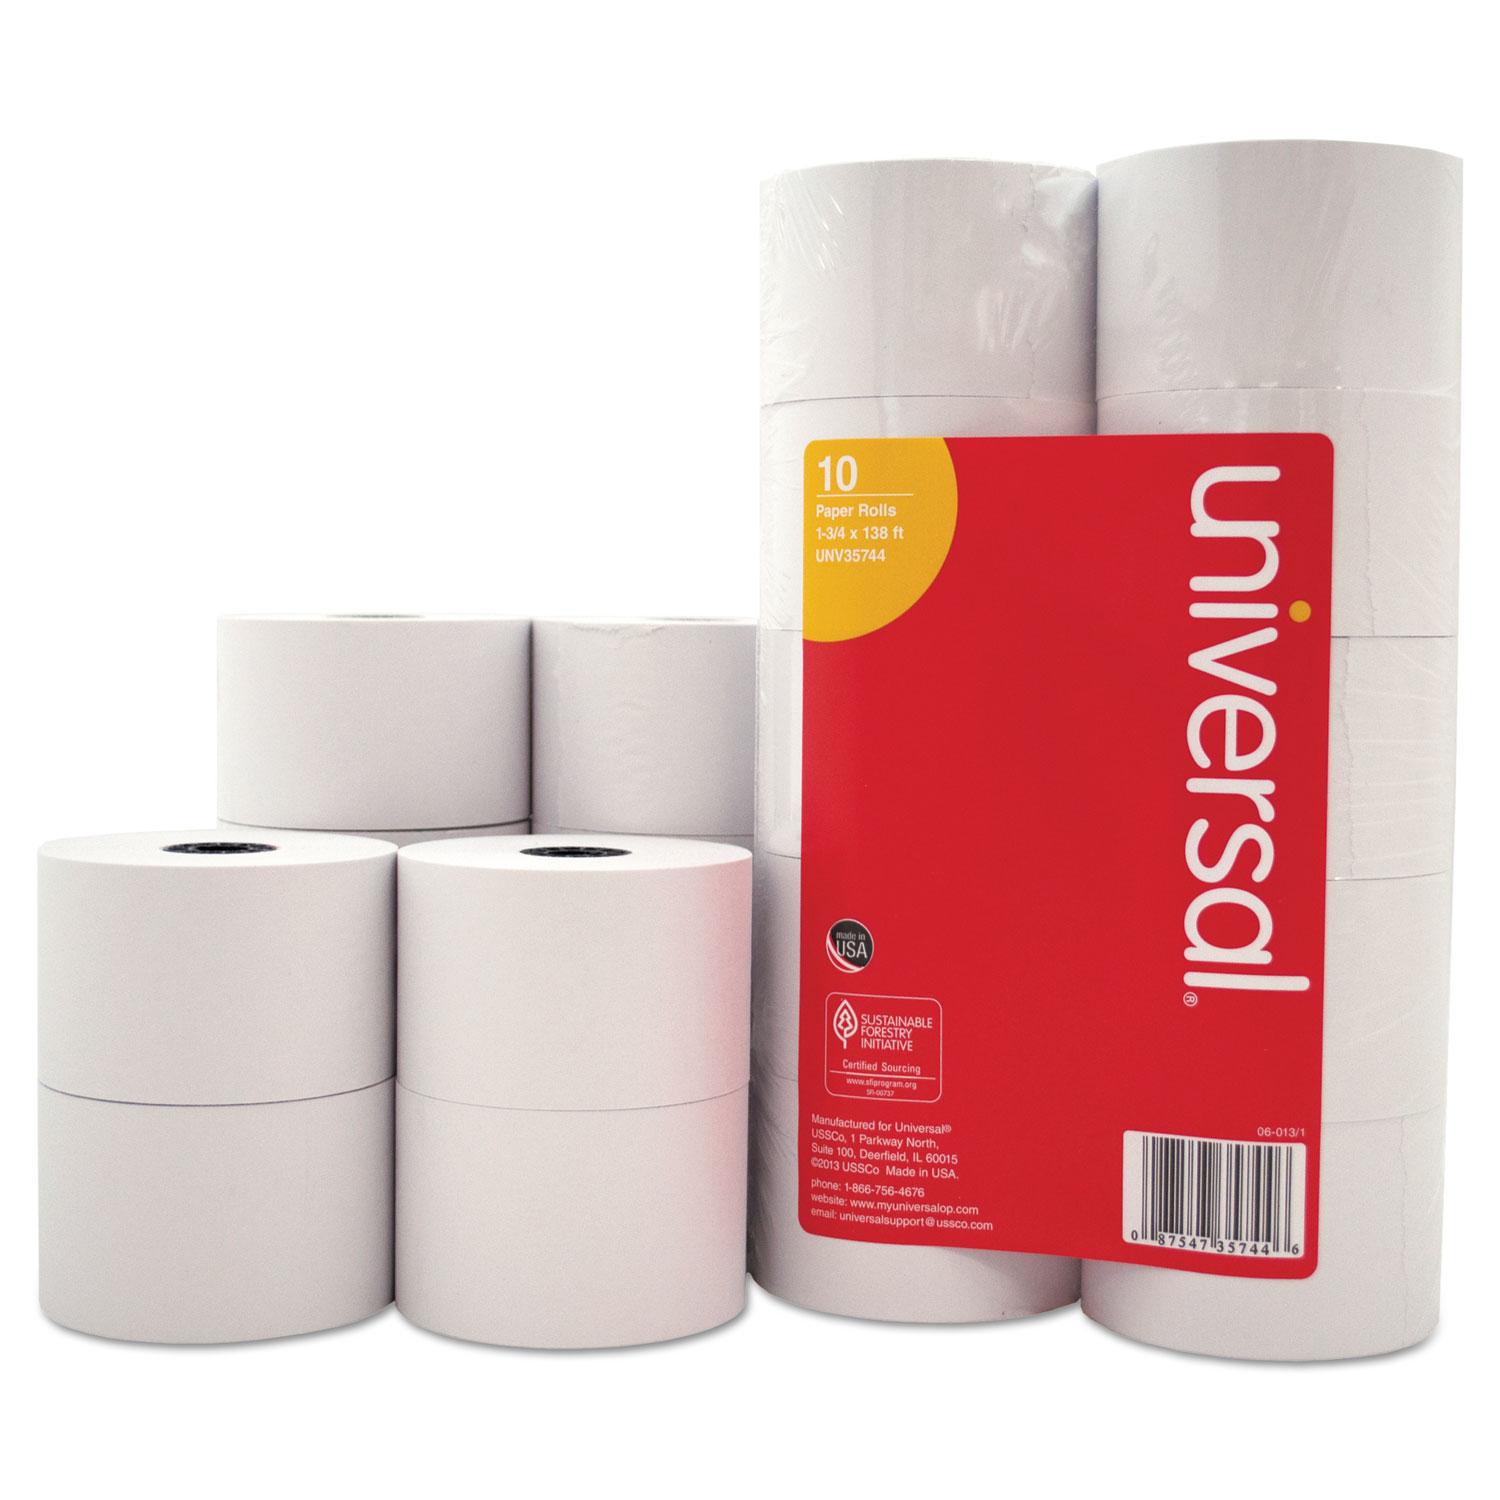  Universal UNV35744 Impact & Inkjet Print Bond Paper Rolls, 0.5 Core, 1.75 x 138 ft, White, 10/Pack (UNV35744) 